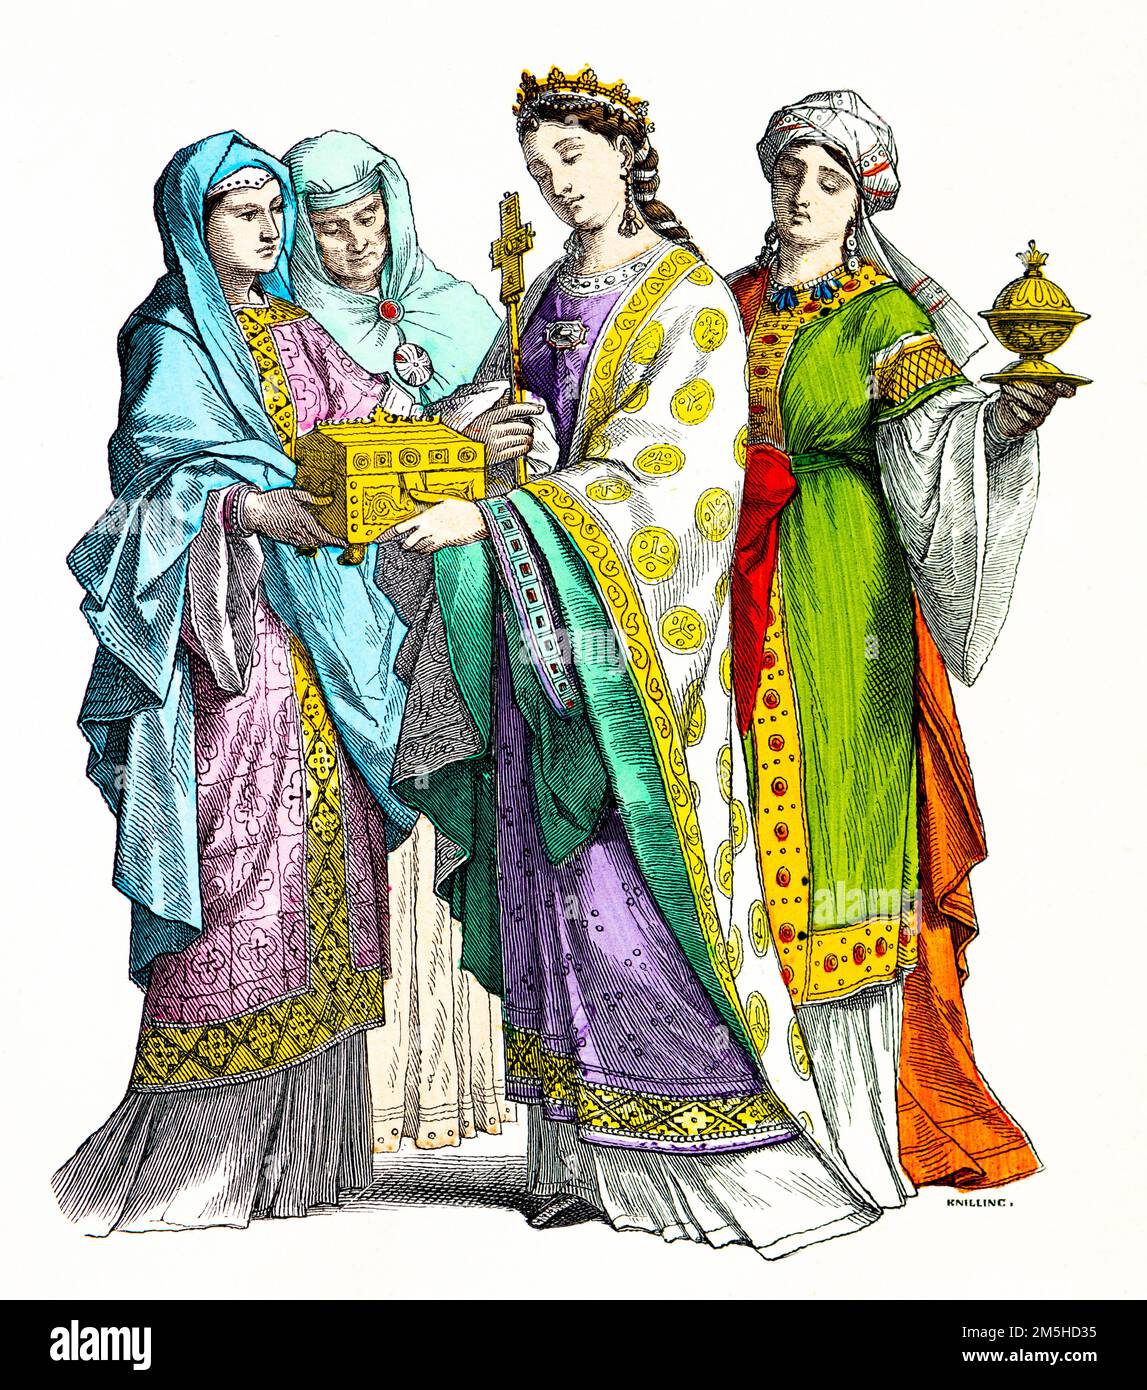 Historical costumes of the 10th century,  historical illustration, Münchener Bilderbogen, München 1890 Stock Photo